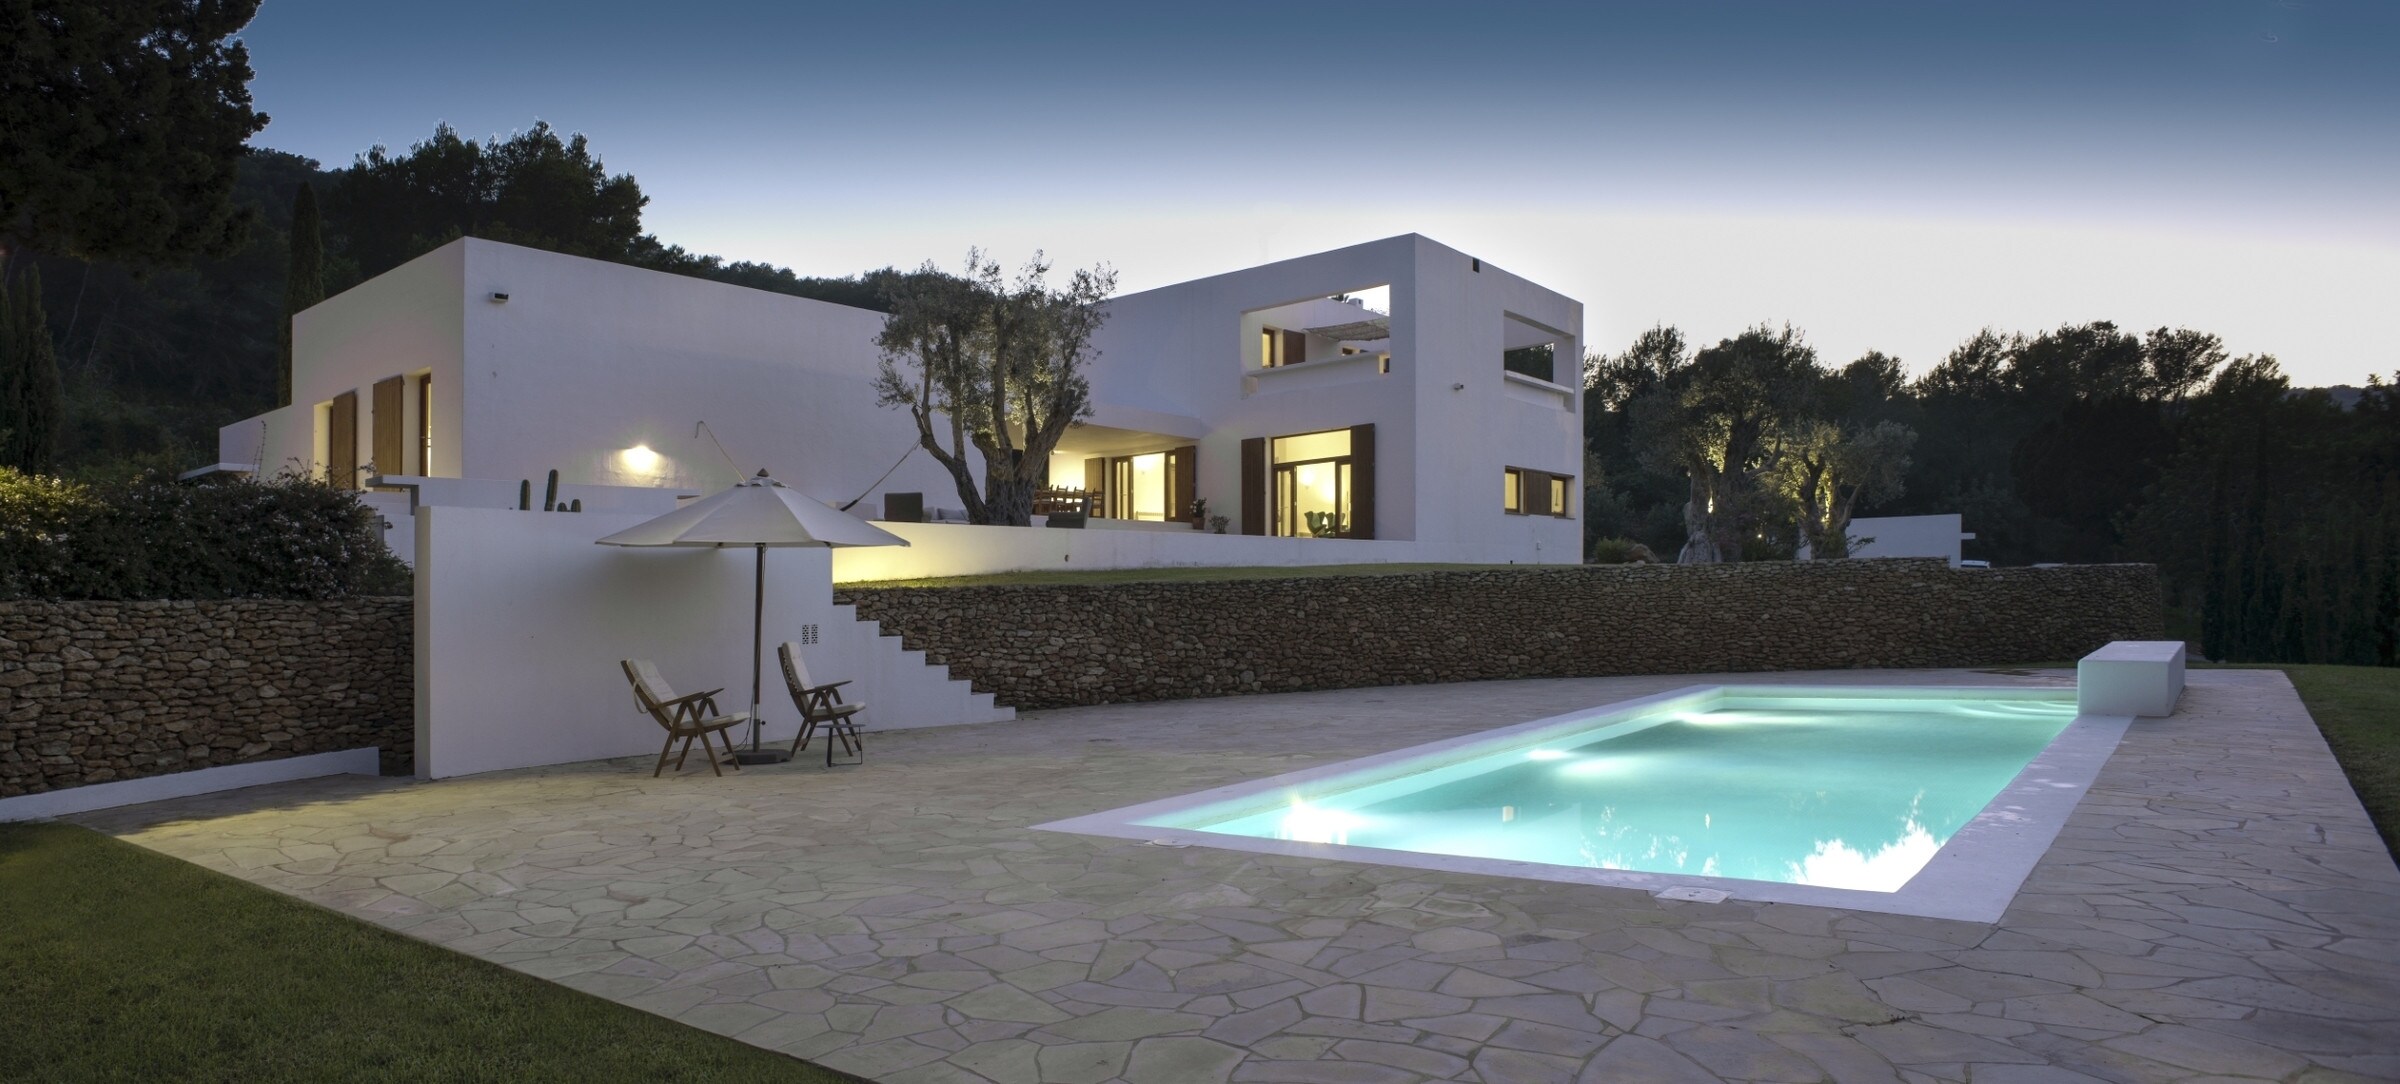 Property Image 1 - Villa Tardos - Santa Eulalia